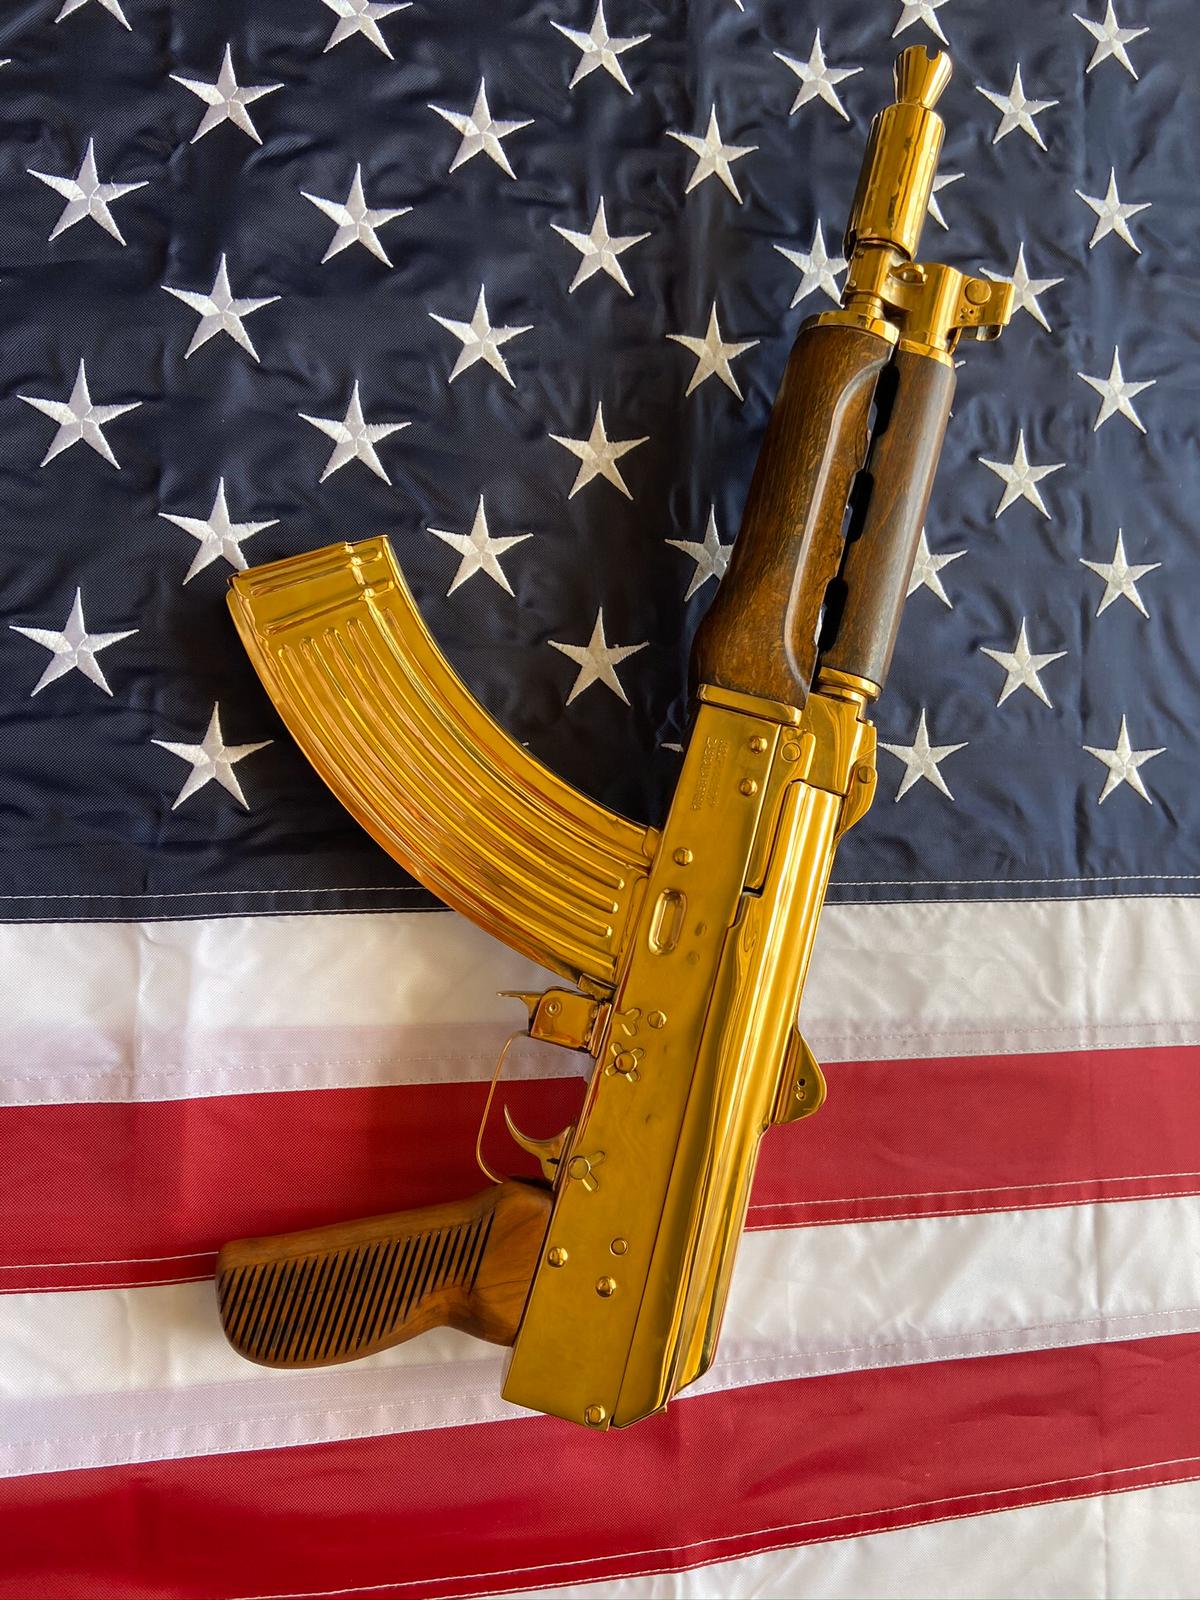 AKS-74U Gold